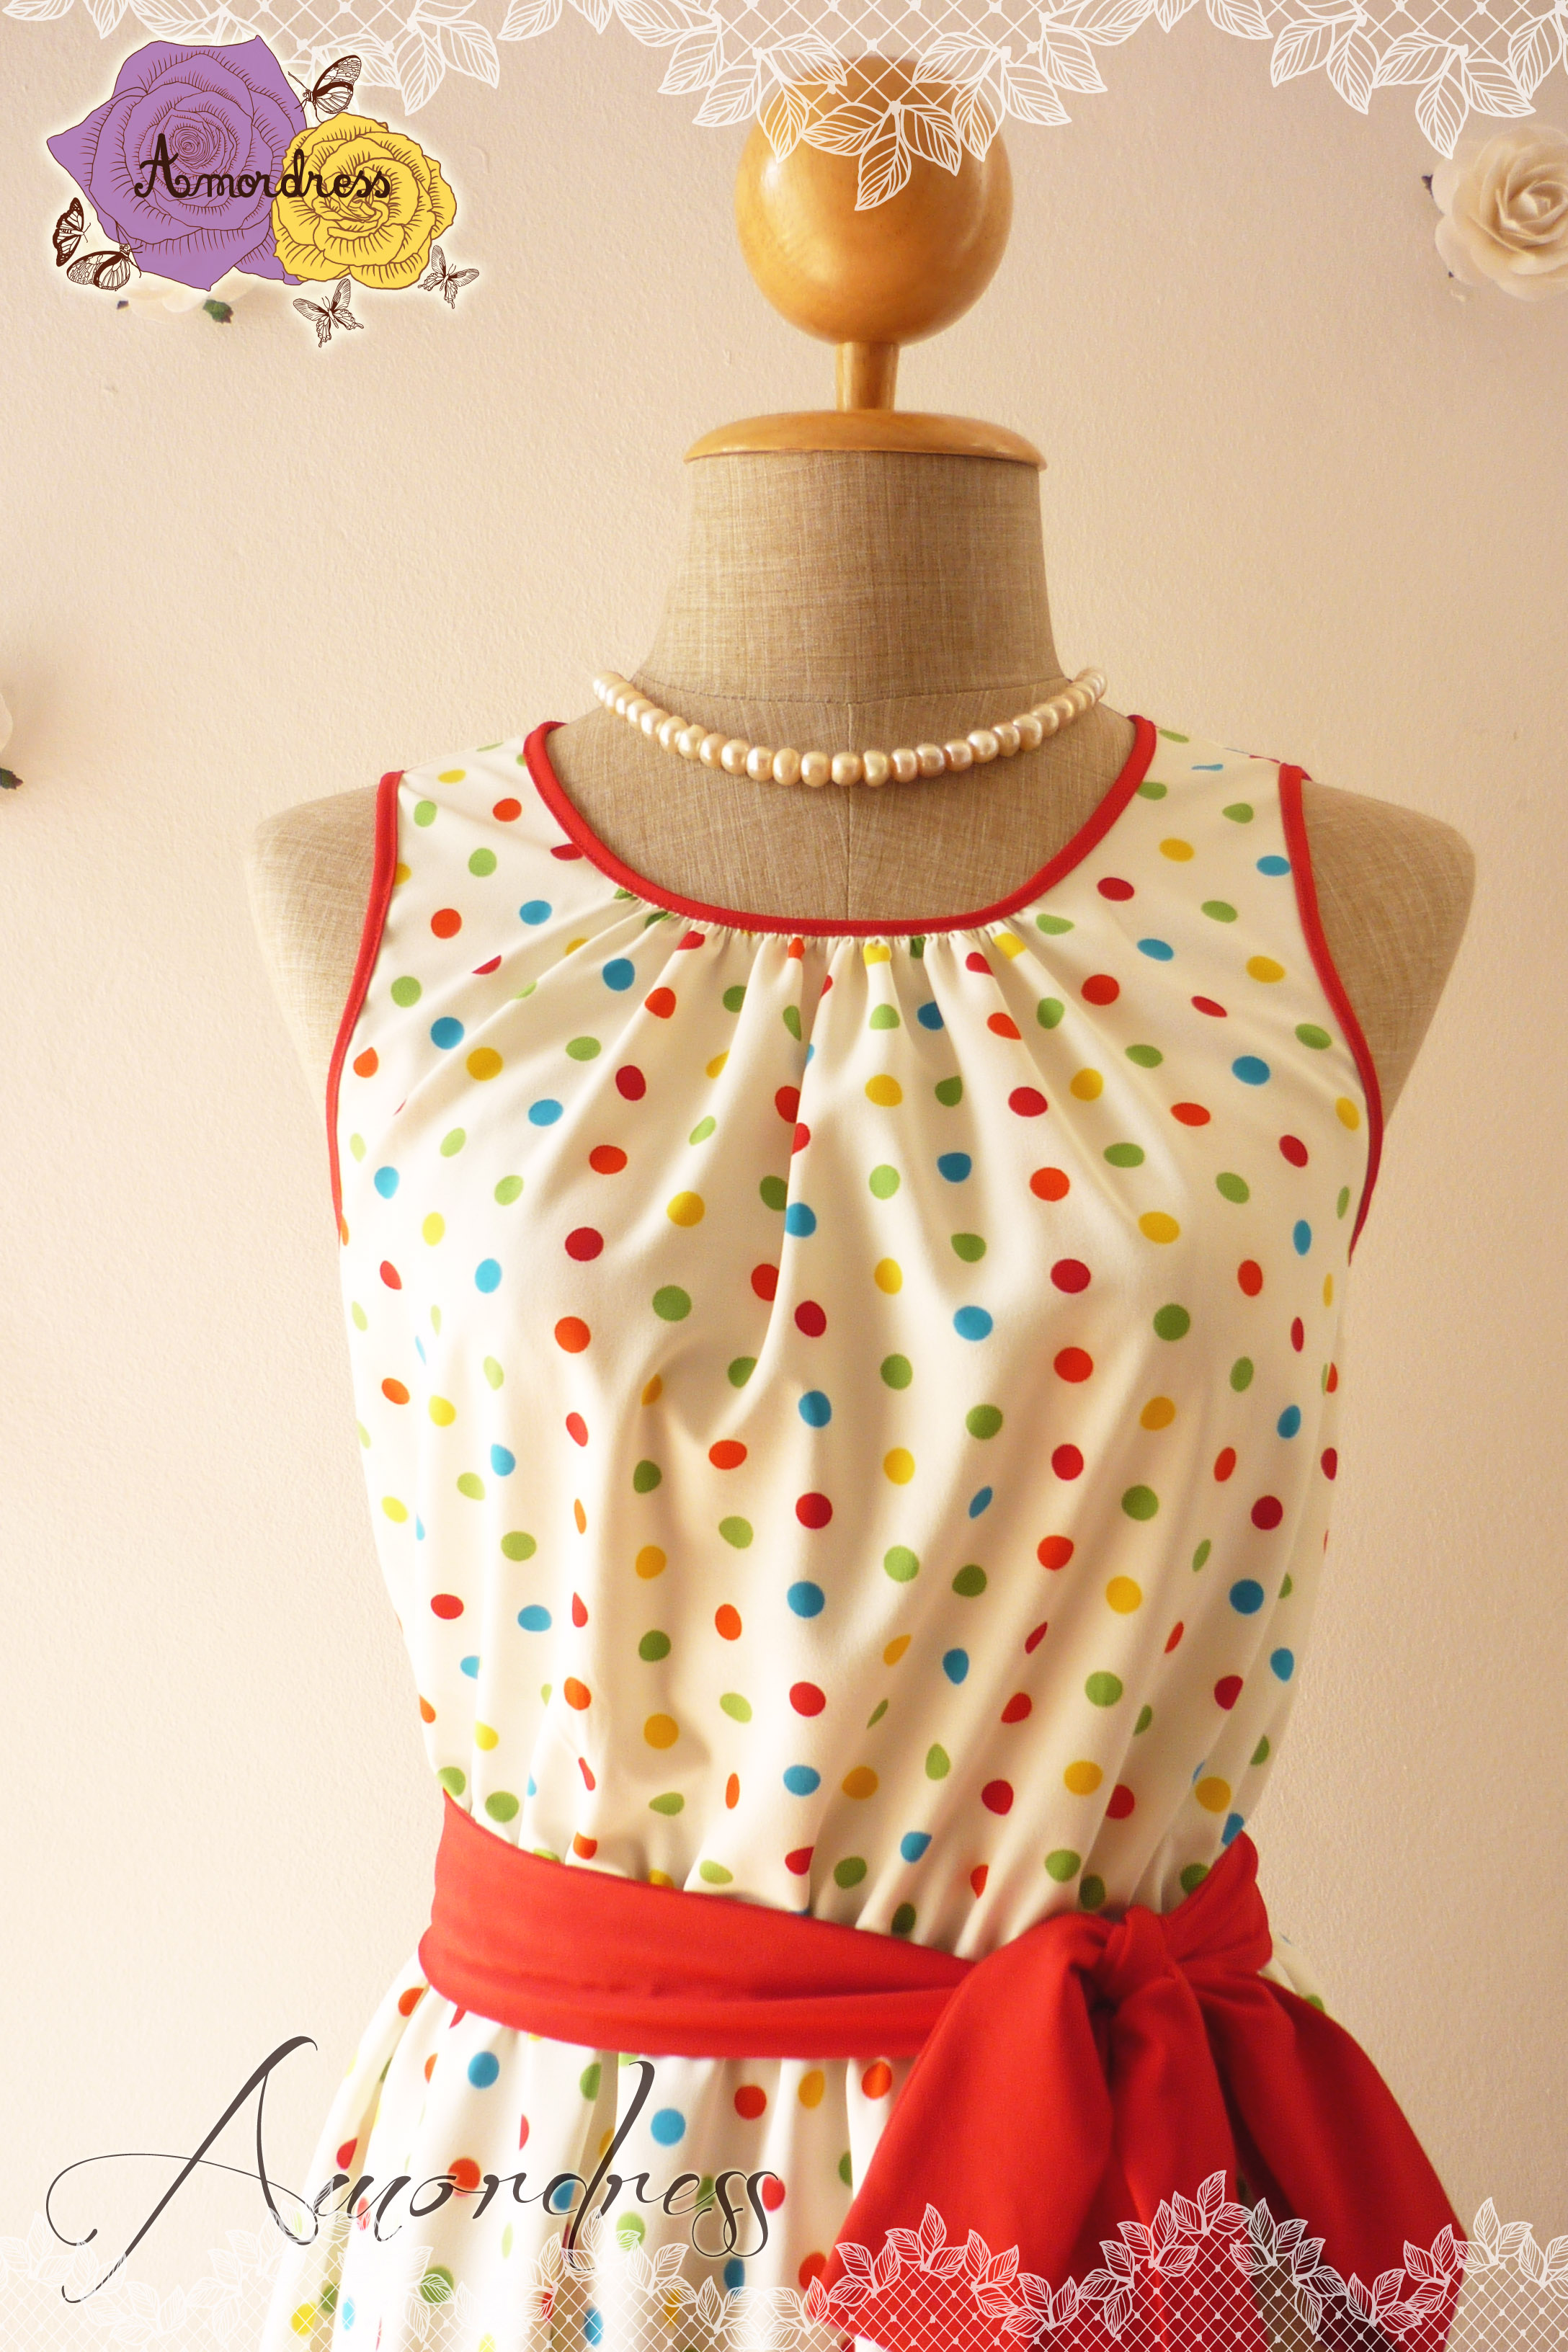 Party Dress Polka Dot Dress Vintage Inspired Dress Swing Dress -Size XS ...